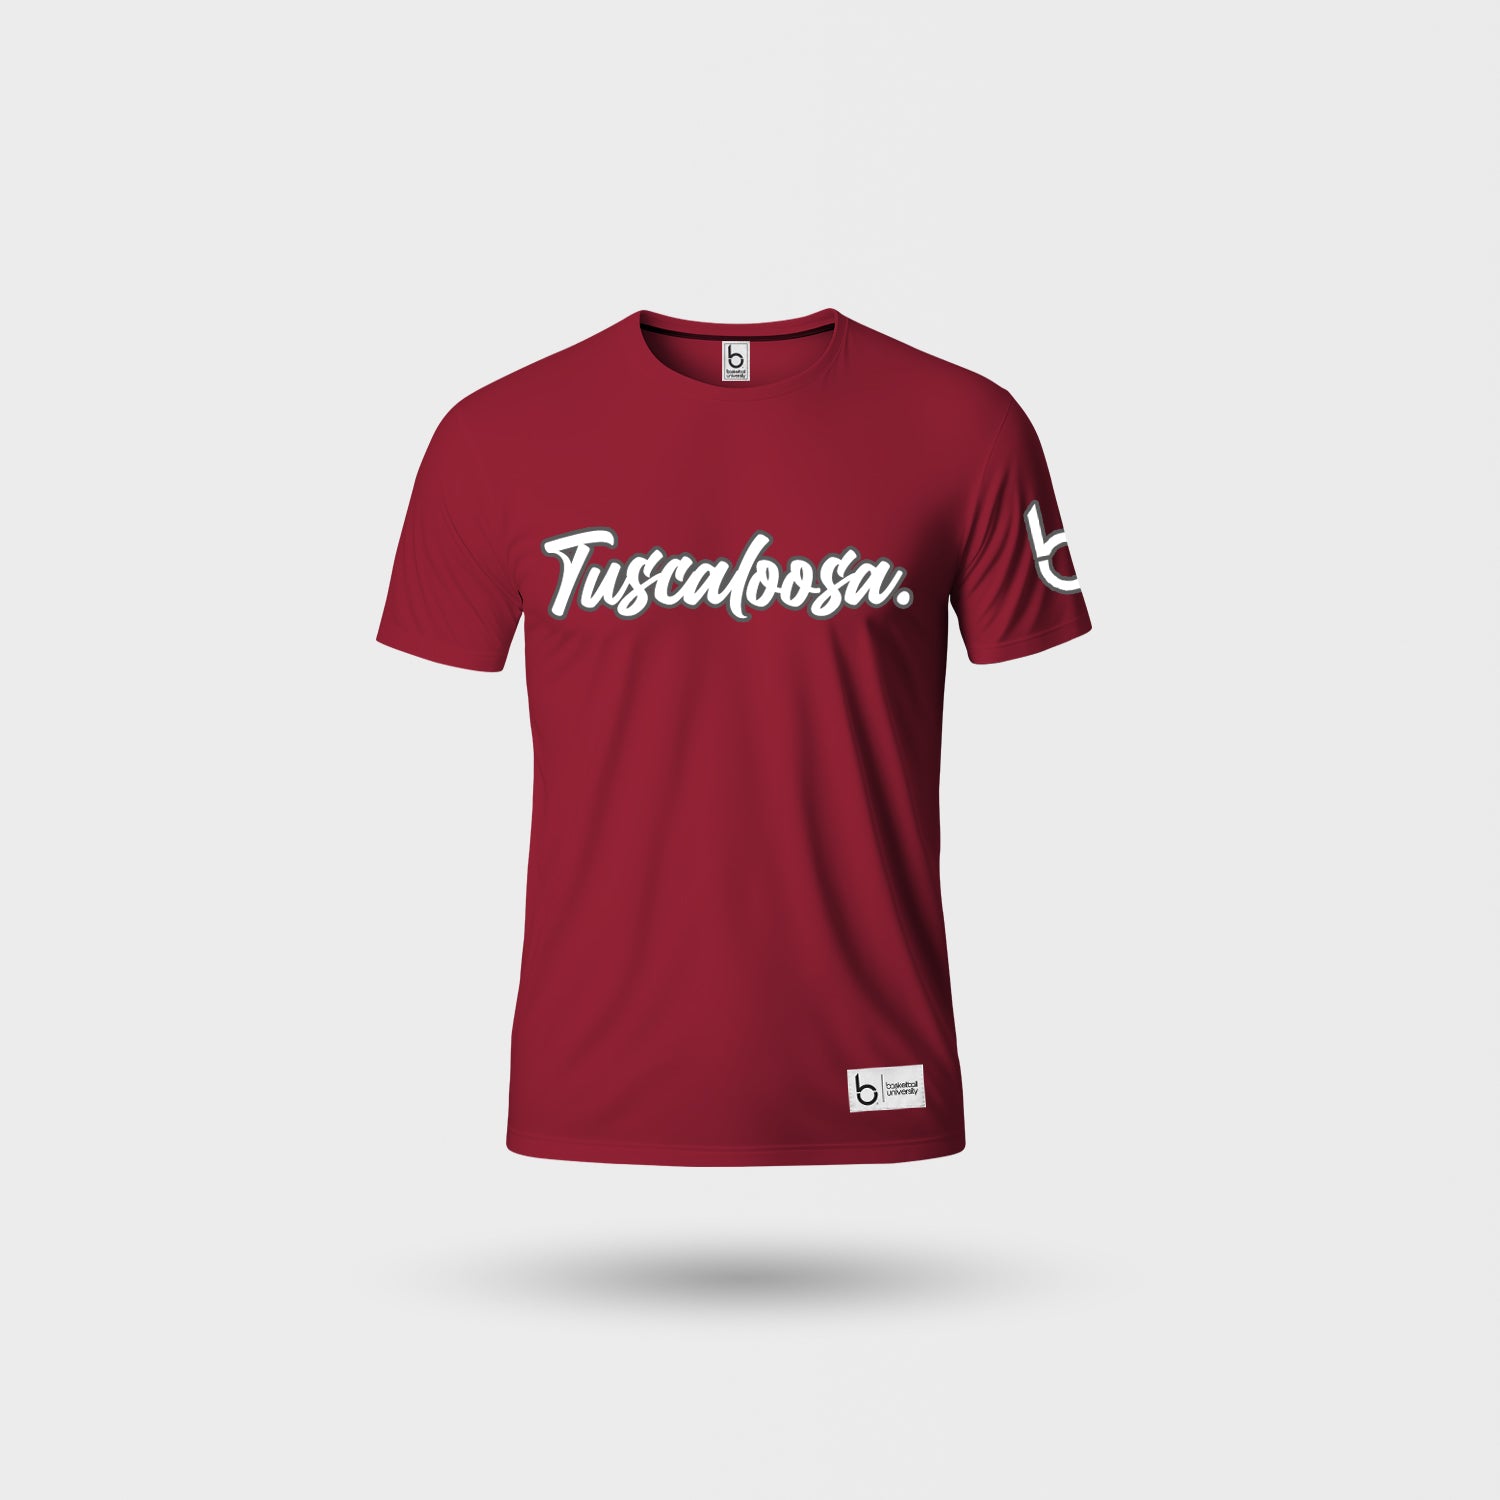 Tuscaloosa - Hoop City T-Shirt